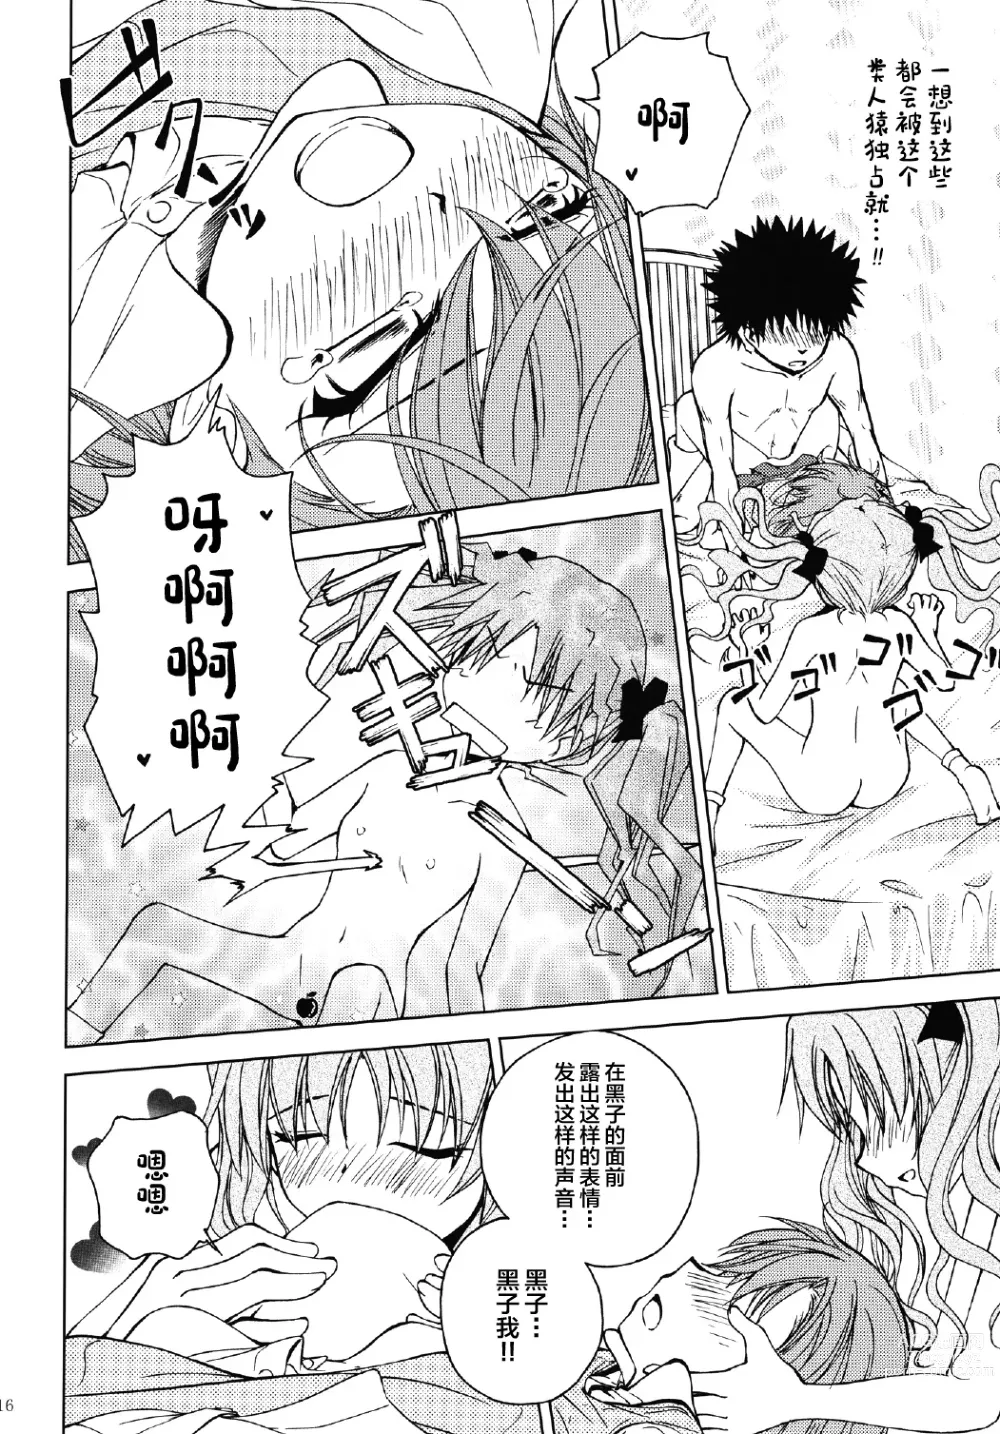 Page 16 of doujinshi Onee-sama o Ruijinen to Sememakuri desu no!!